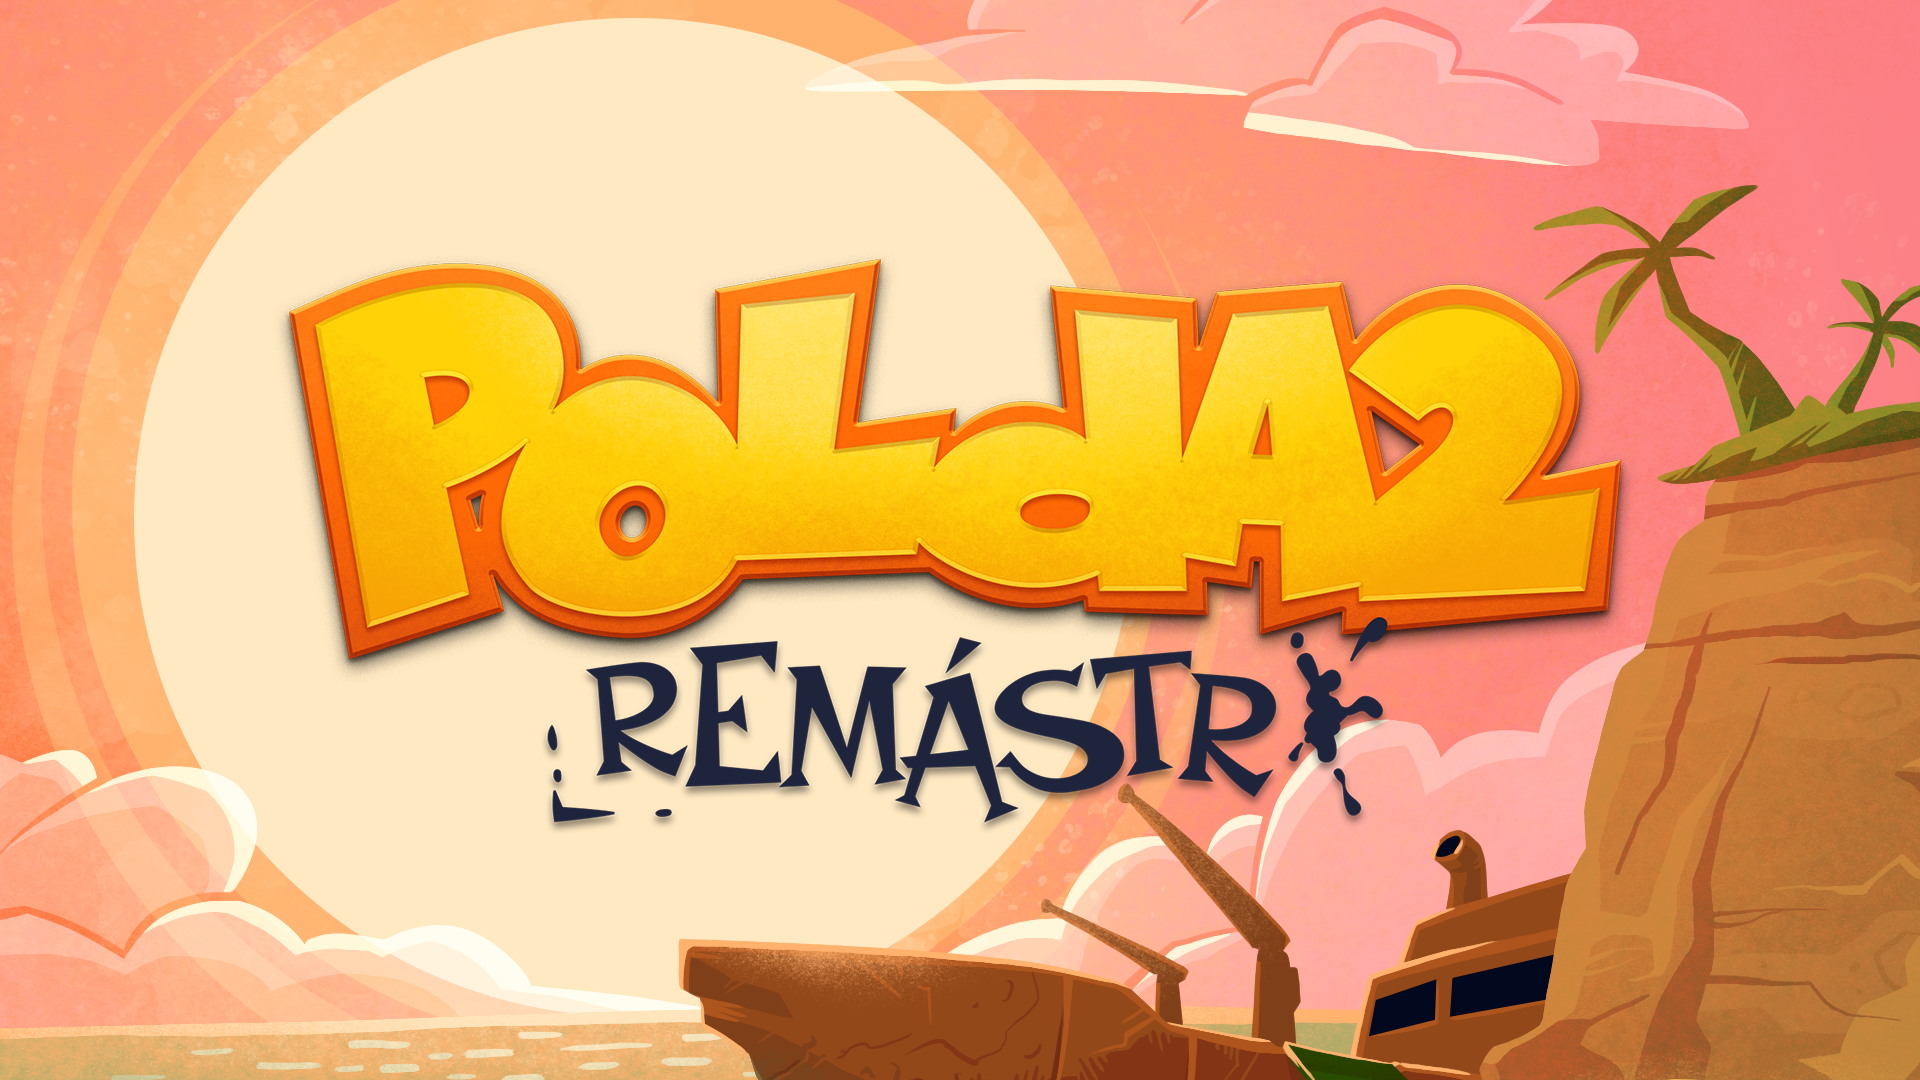 Polda 2 Remstr - screenshot 17